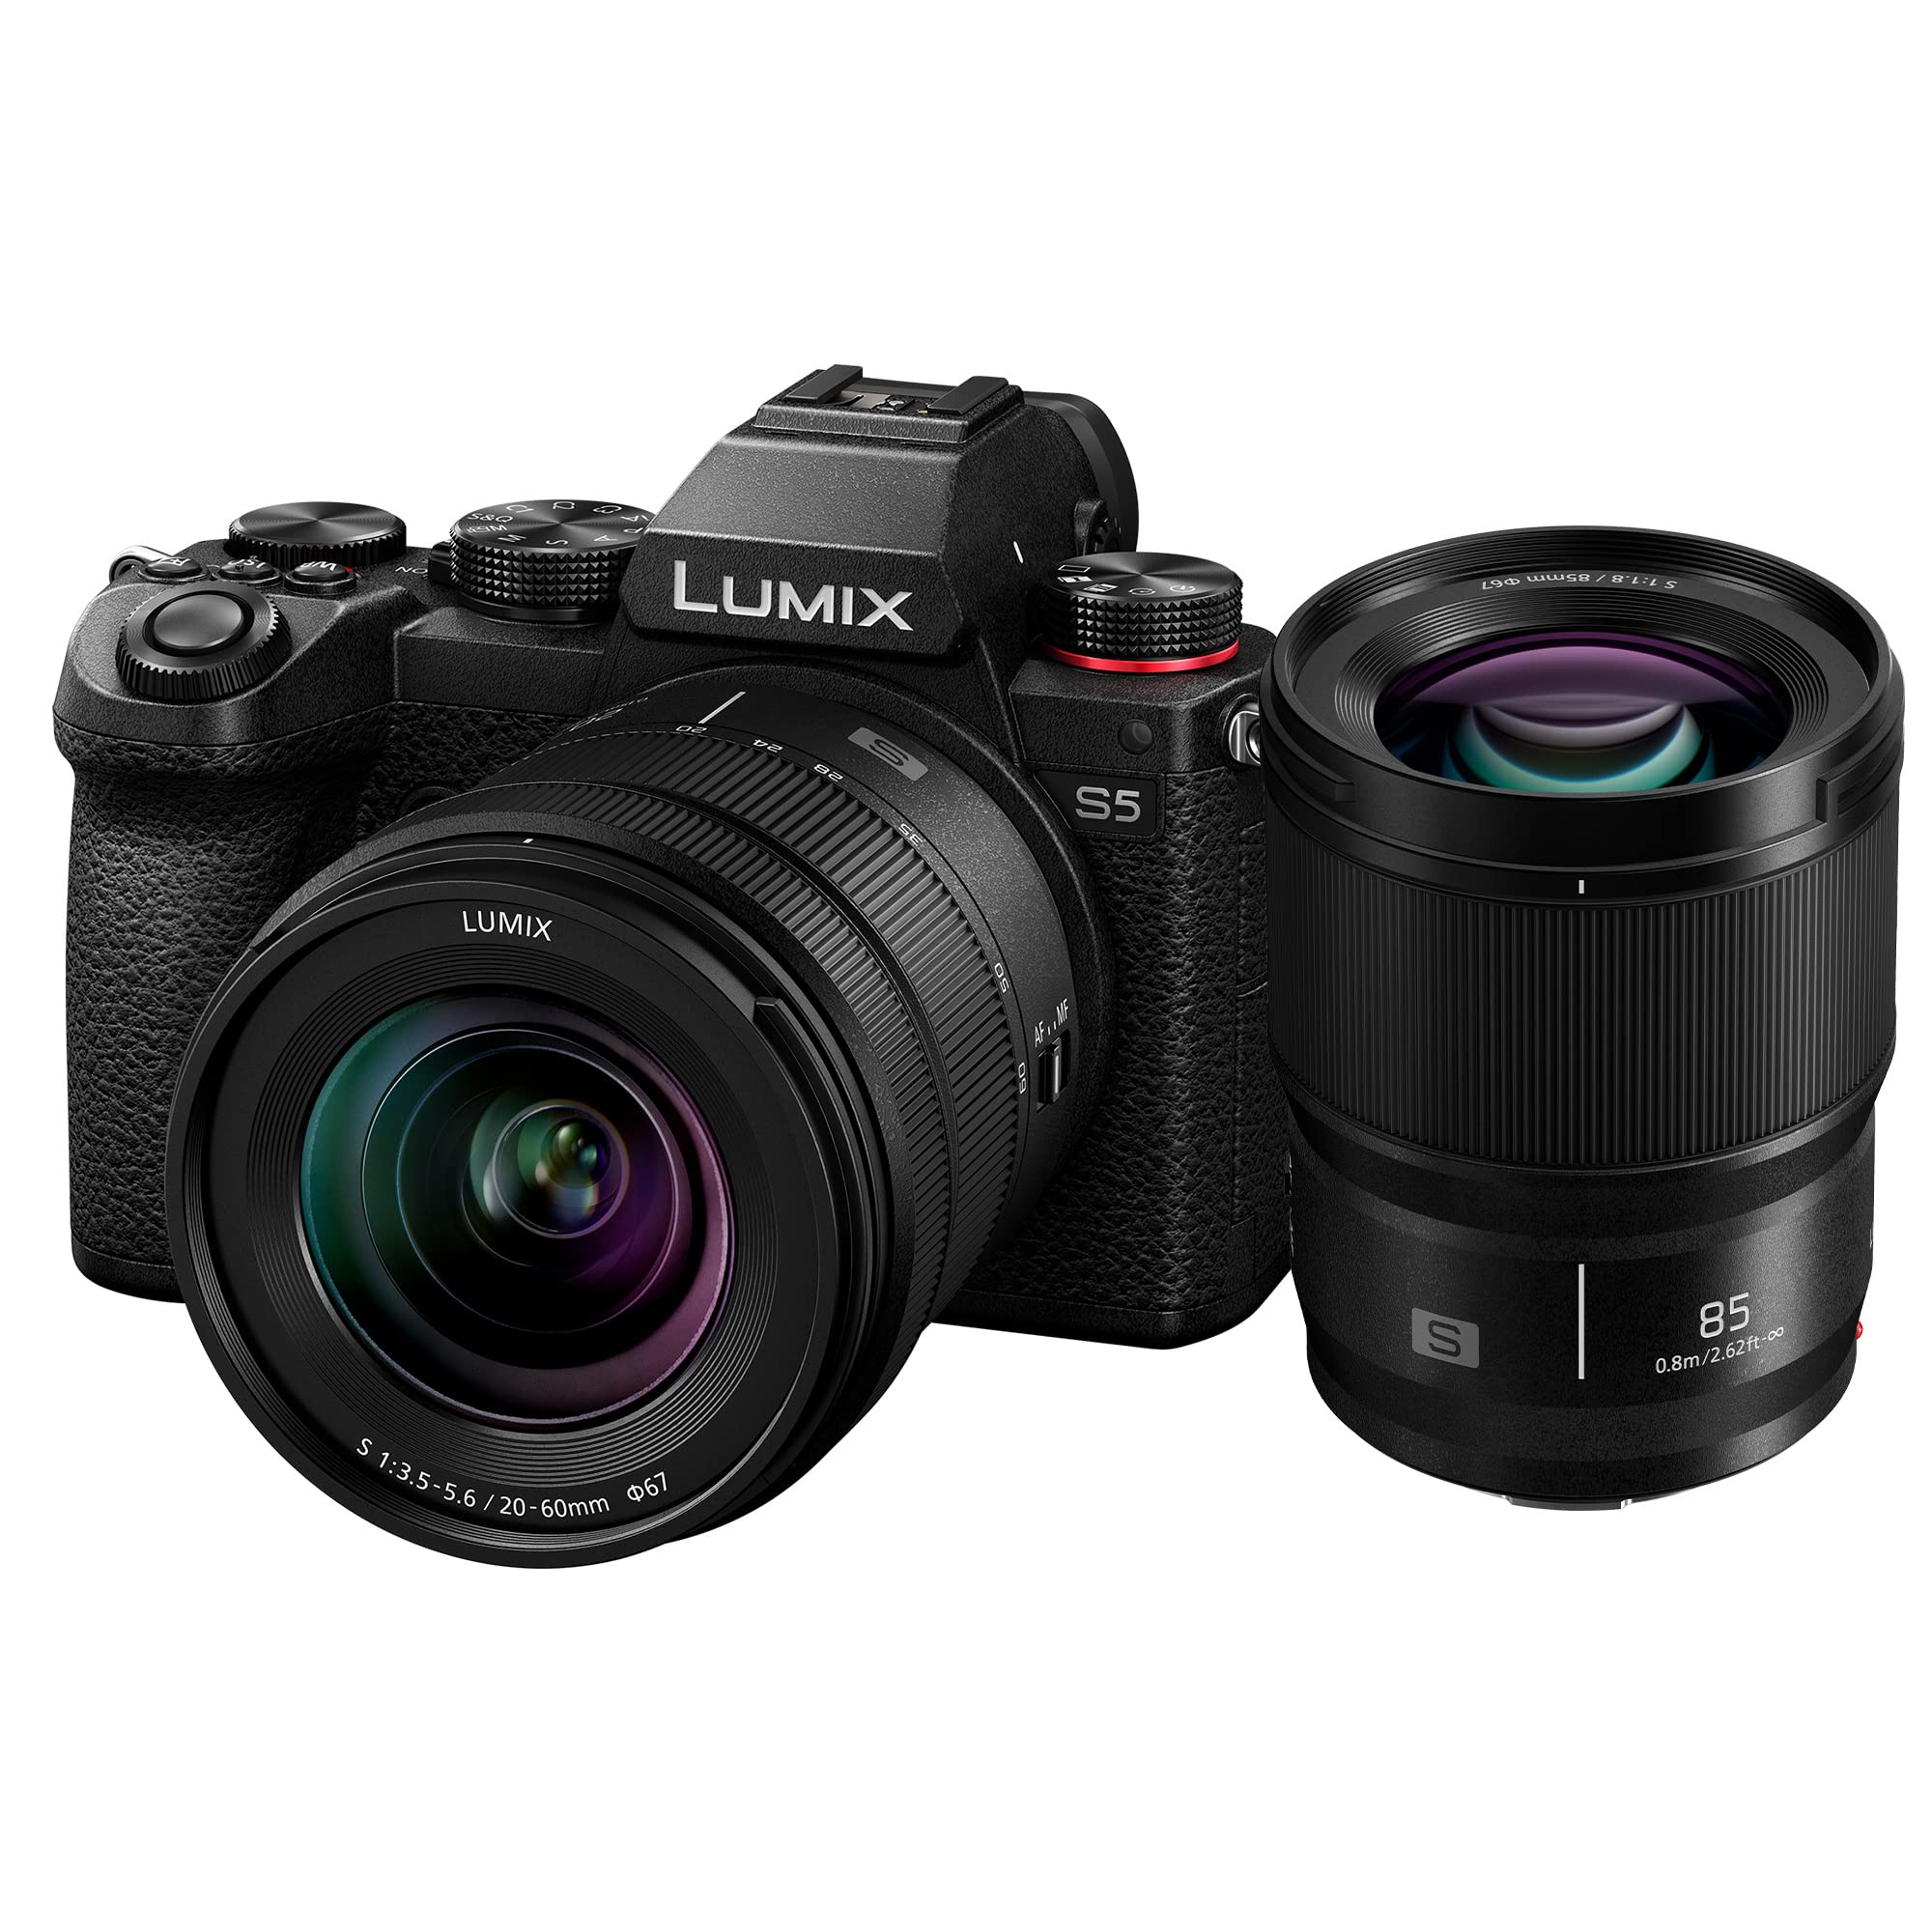 Panasonic Lumix S5 Full Frame Mirrorless Camera w/ Lumix S 20-60mm F3.5-5.6 & 85mm F1.8 Lens $1698 + Free Shipping